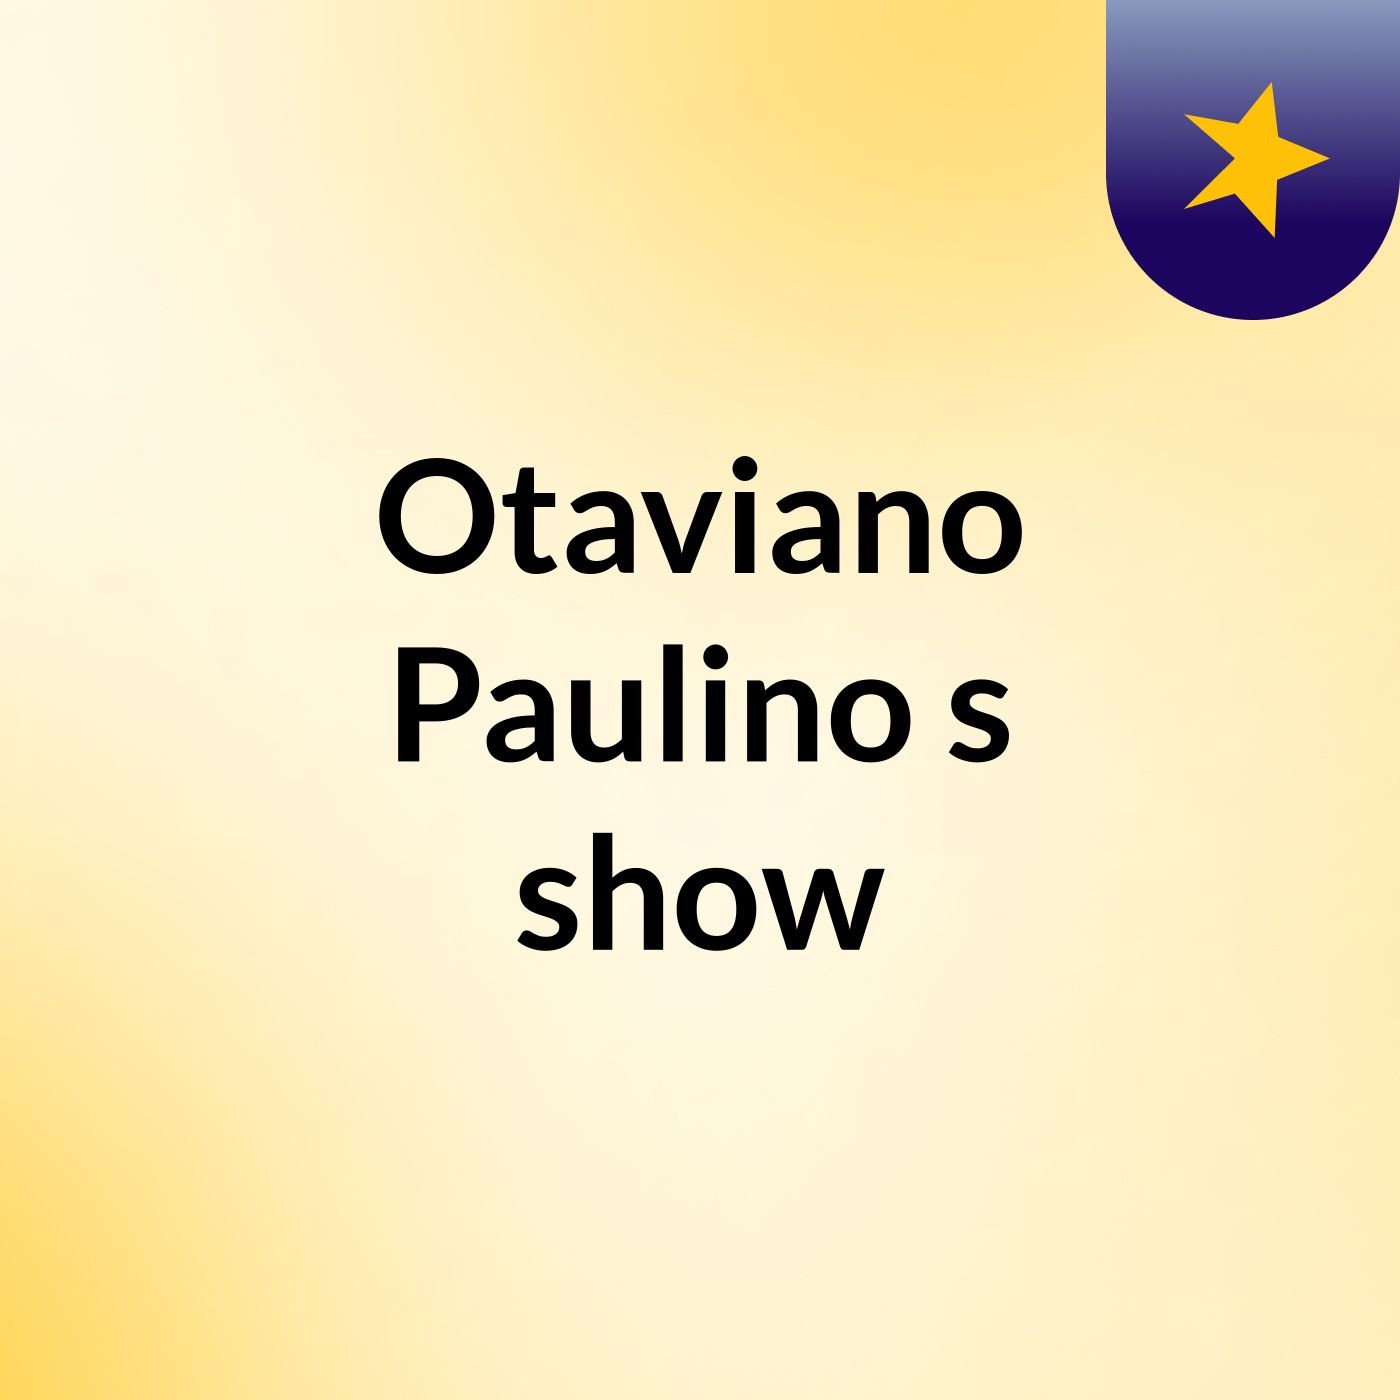 Episódio 45 - Otaviano Paulino's show